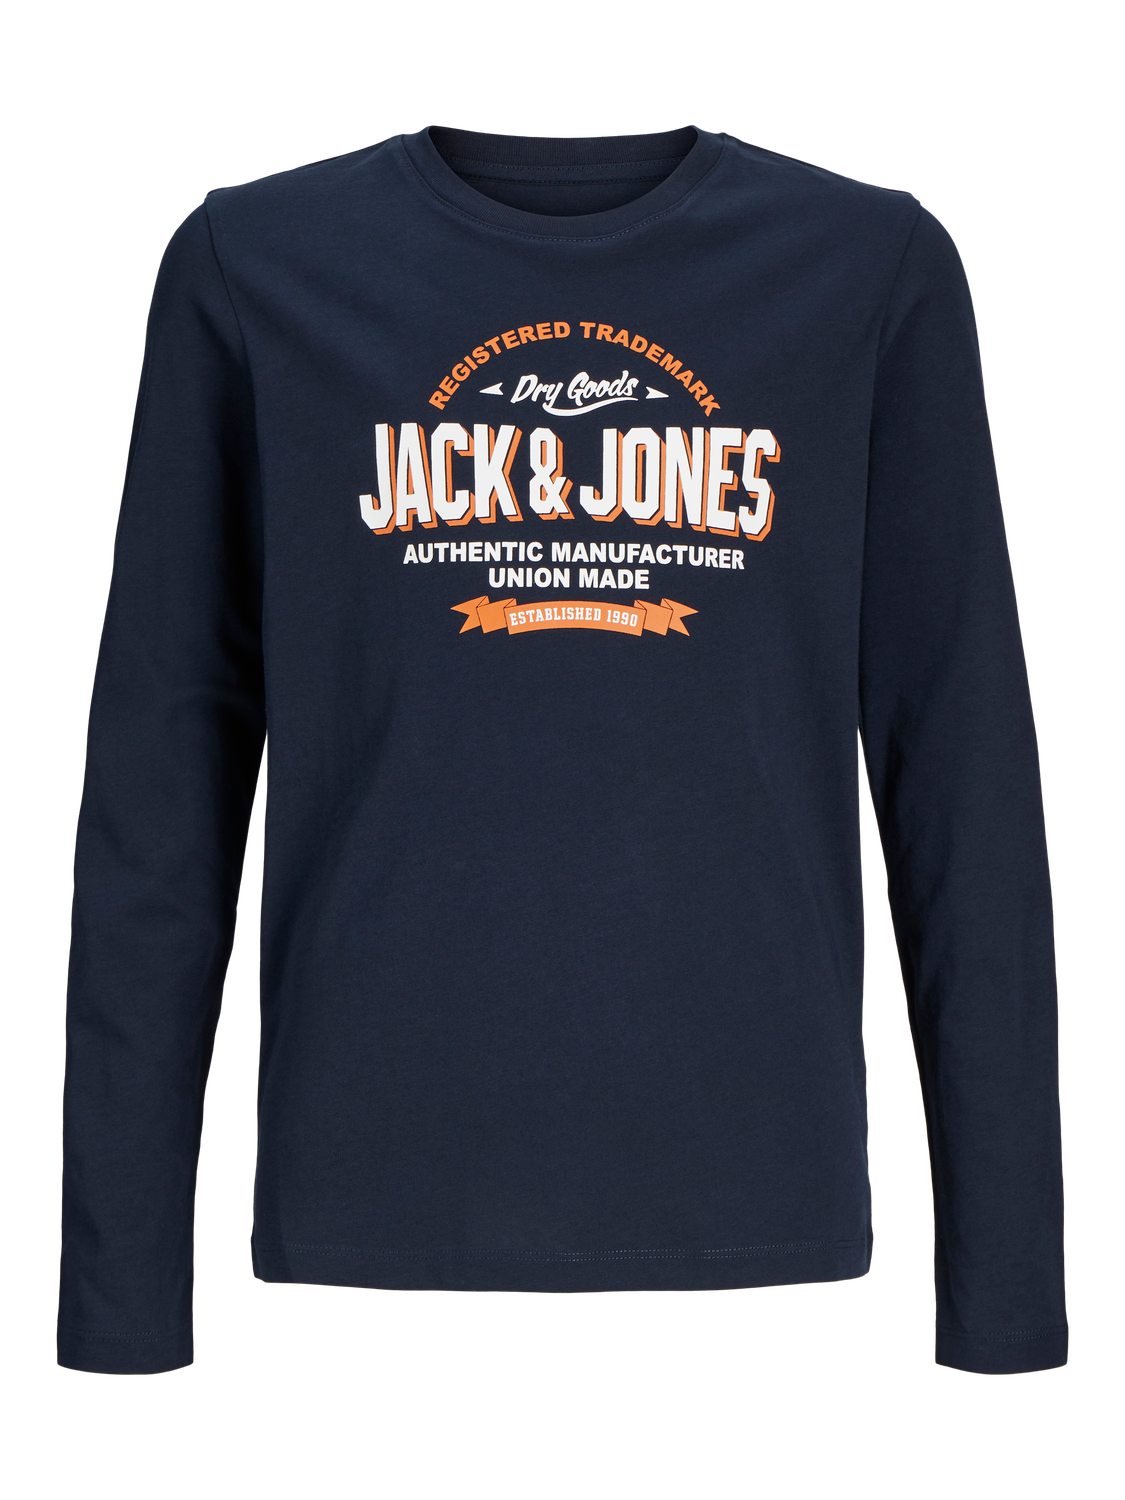 Jack & Jones Logo T-shirt For boys -Navy Blazer - 12258880